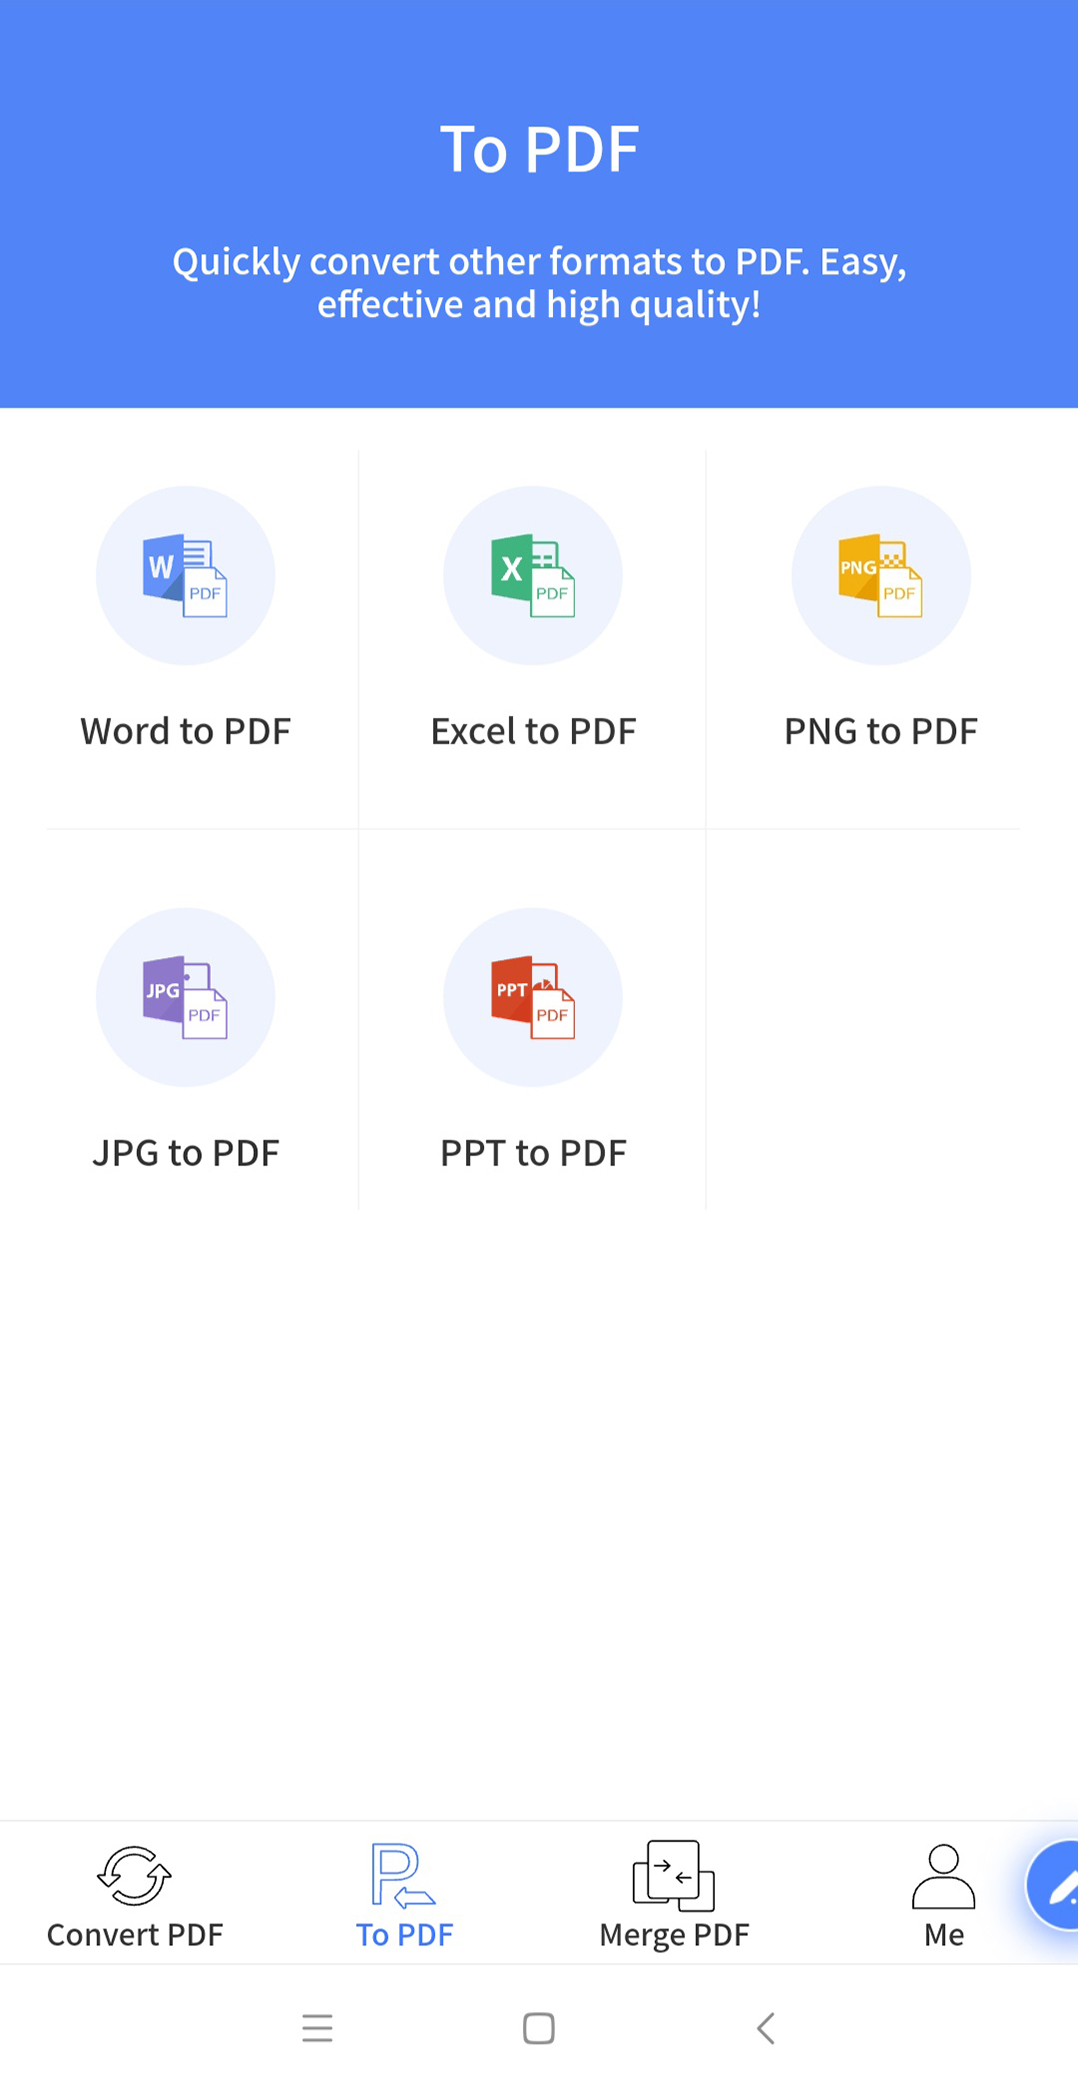 Apowersoft PDF Converter